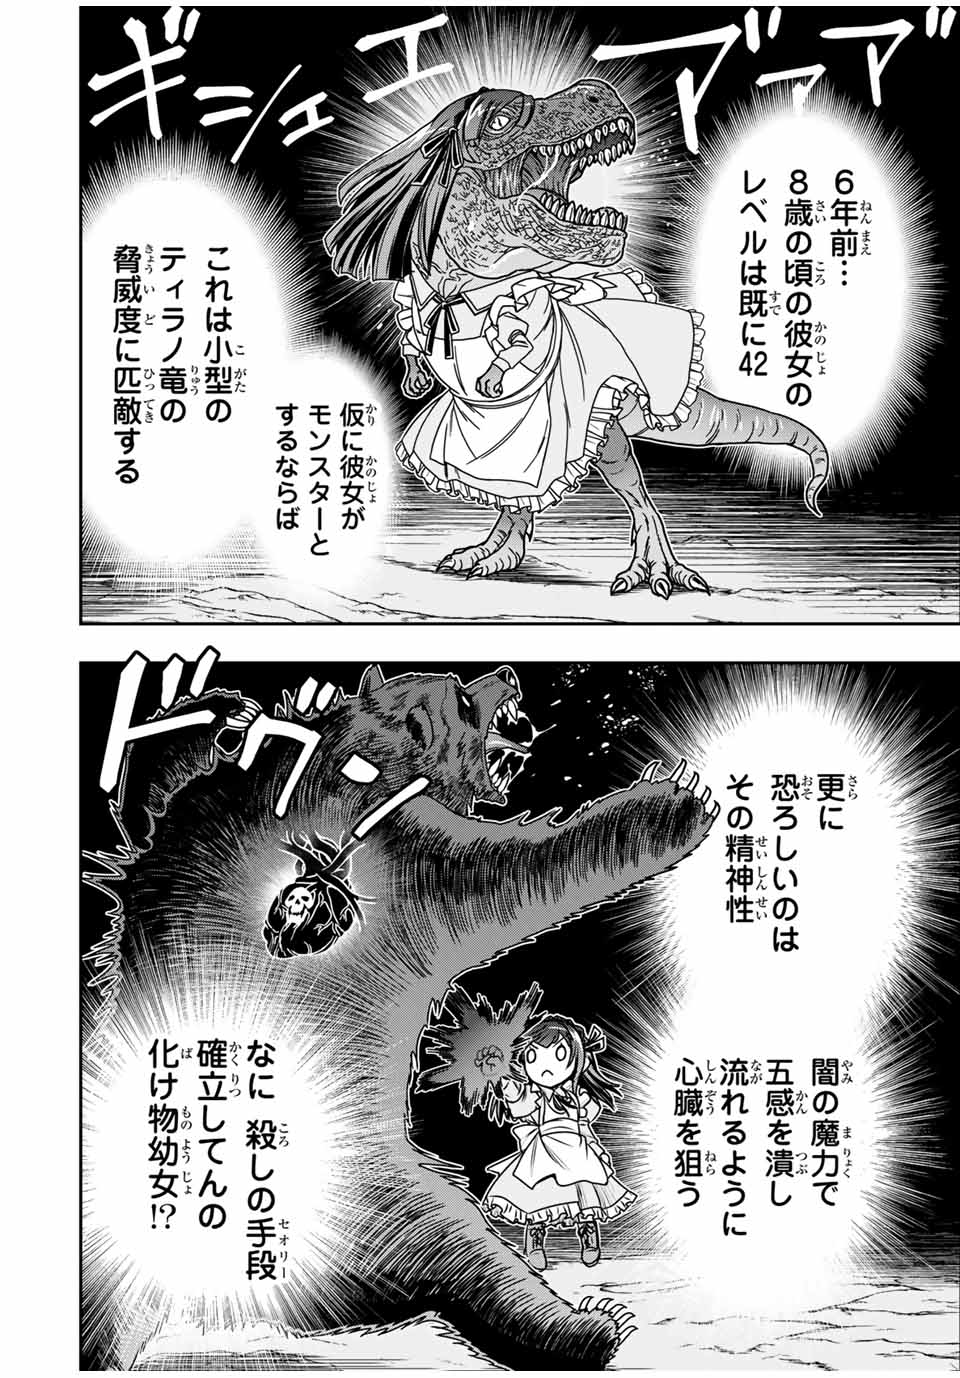 Nengan no Akuyaku Reijou (Last Boss) no Karada wo Teniiretazo!  - Chapter 4 - Page 2